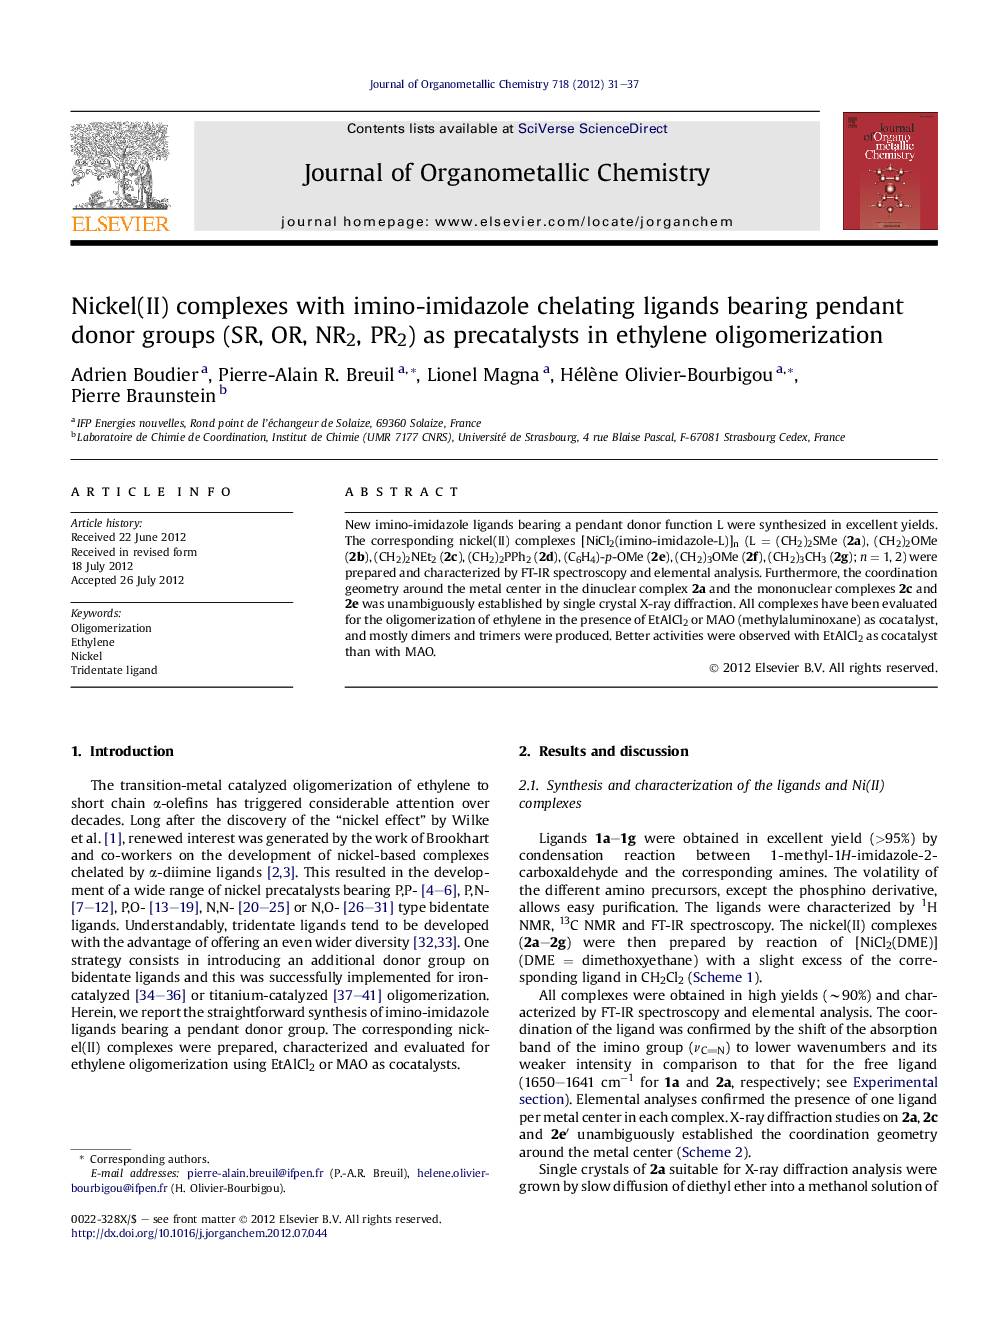 Nickel(II) complexes with imino-imidazole chelating ligands bearing pendant donor groups (SR, OR, NR2, PR2) as precatalysts in ethylene oligomerization